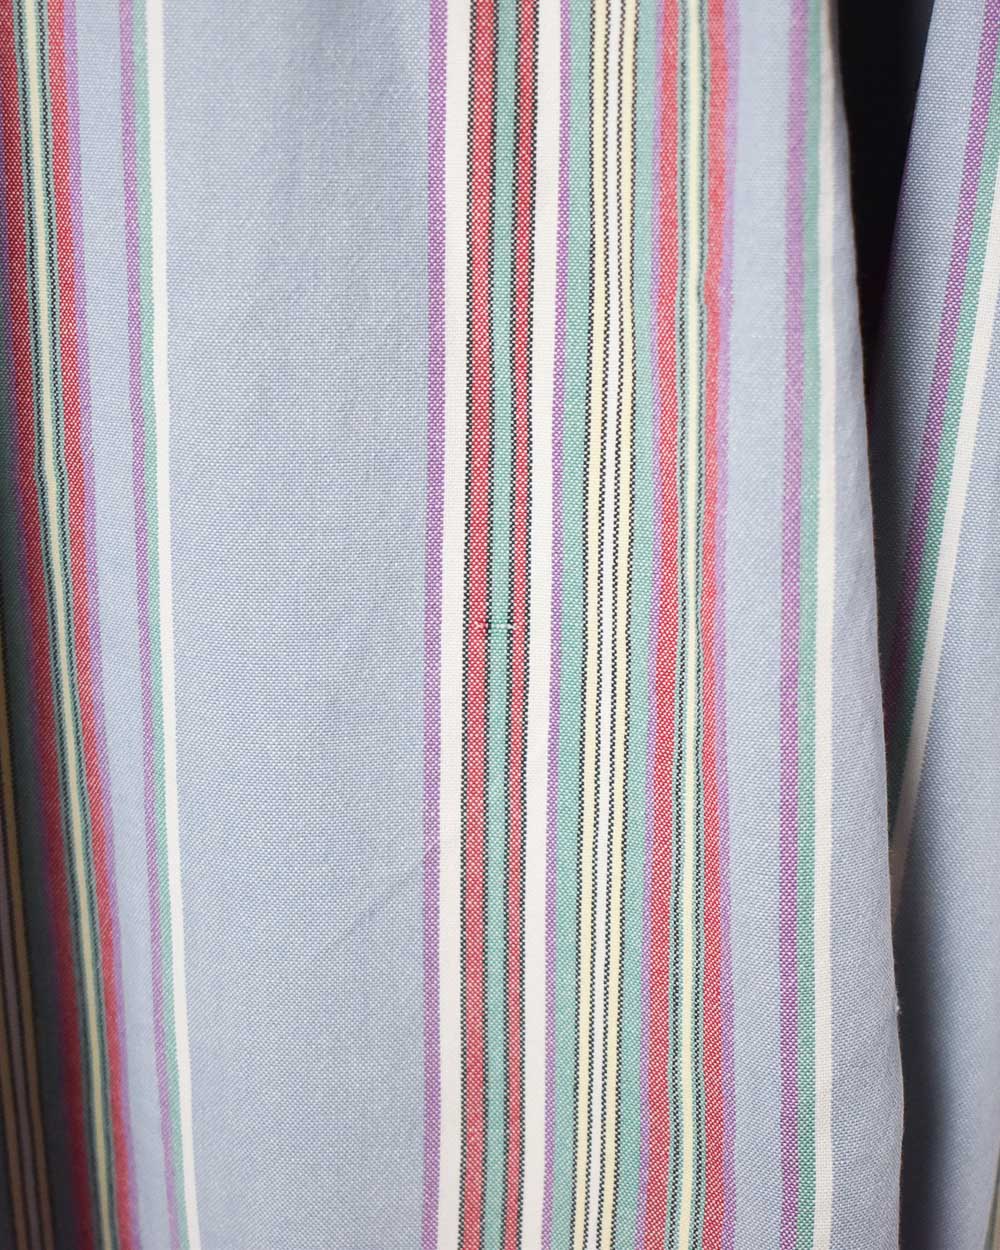 BabyBlue Polo Ralph Lauren Striped Shirt - X-Large